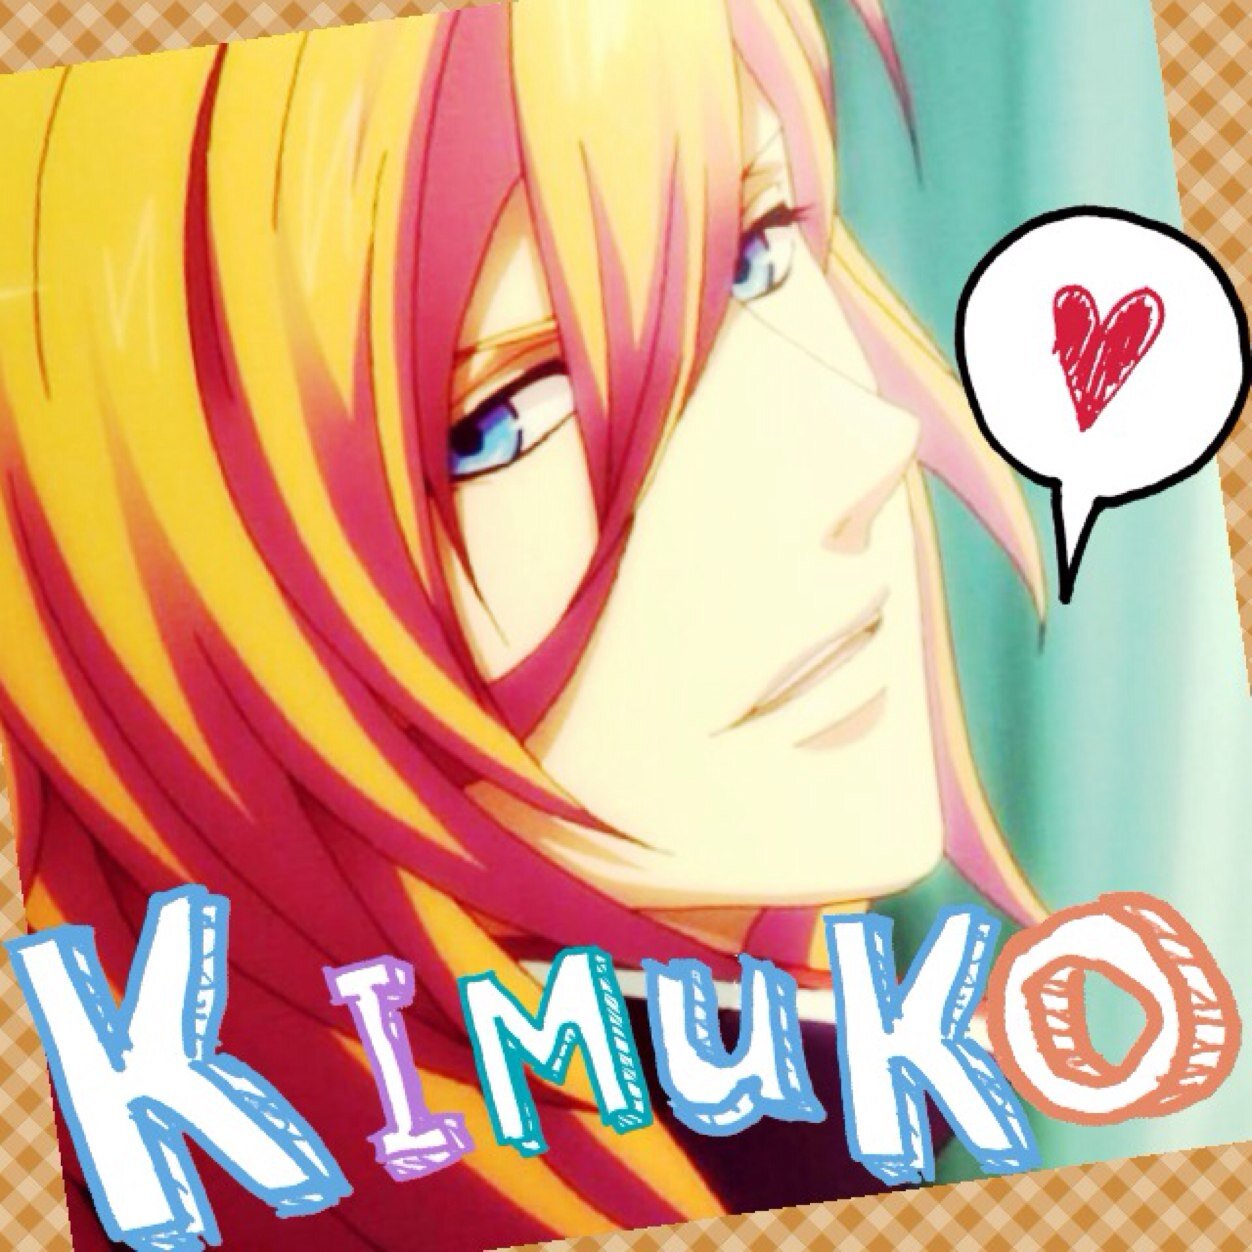 KIMUKOさんのプロフィール画像